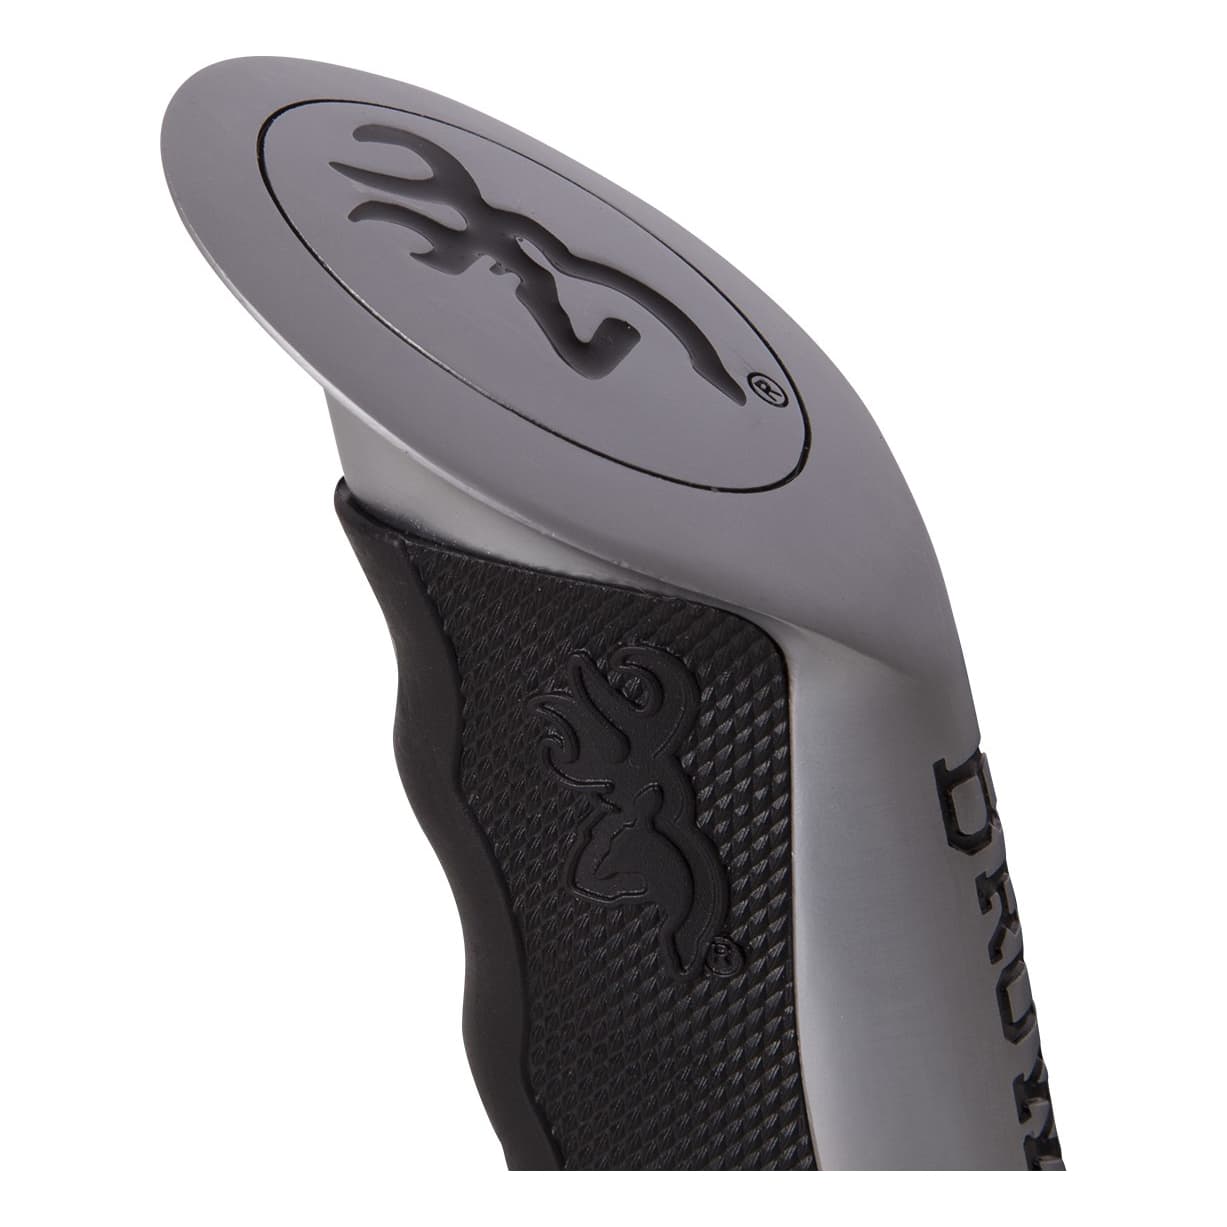 Browning® Pistol Grip Gear Shift Knob - Engraved Browning® Buckmark Logo